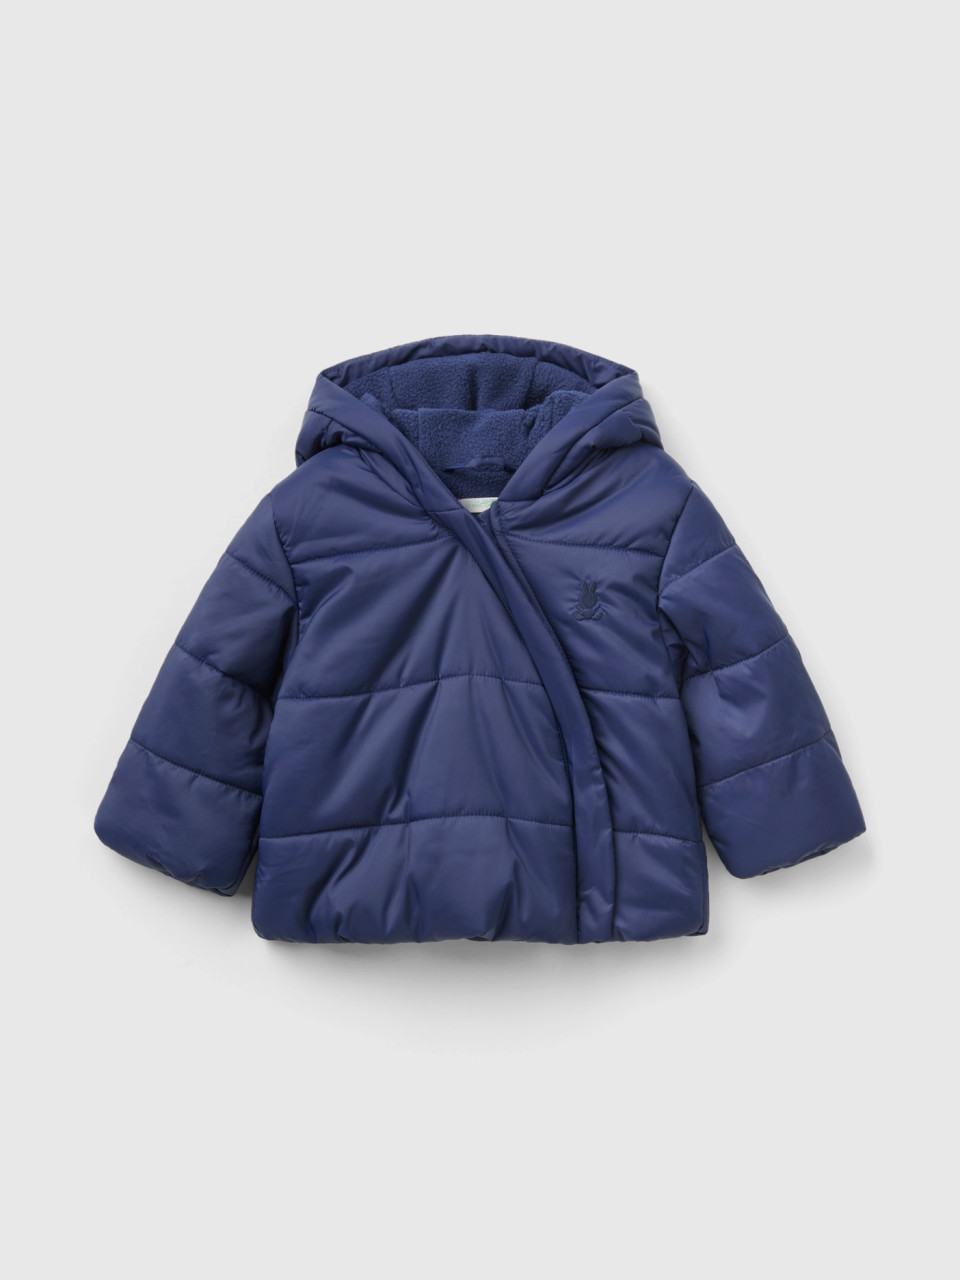 Benetton, Padded Jacket With Hood, Dark Blue, Kids